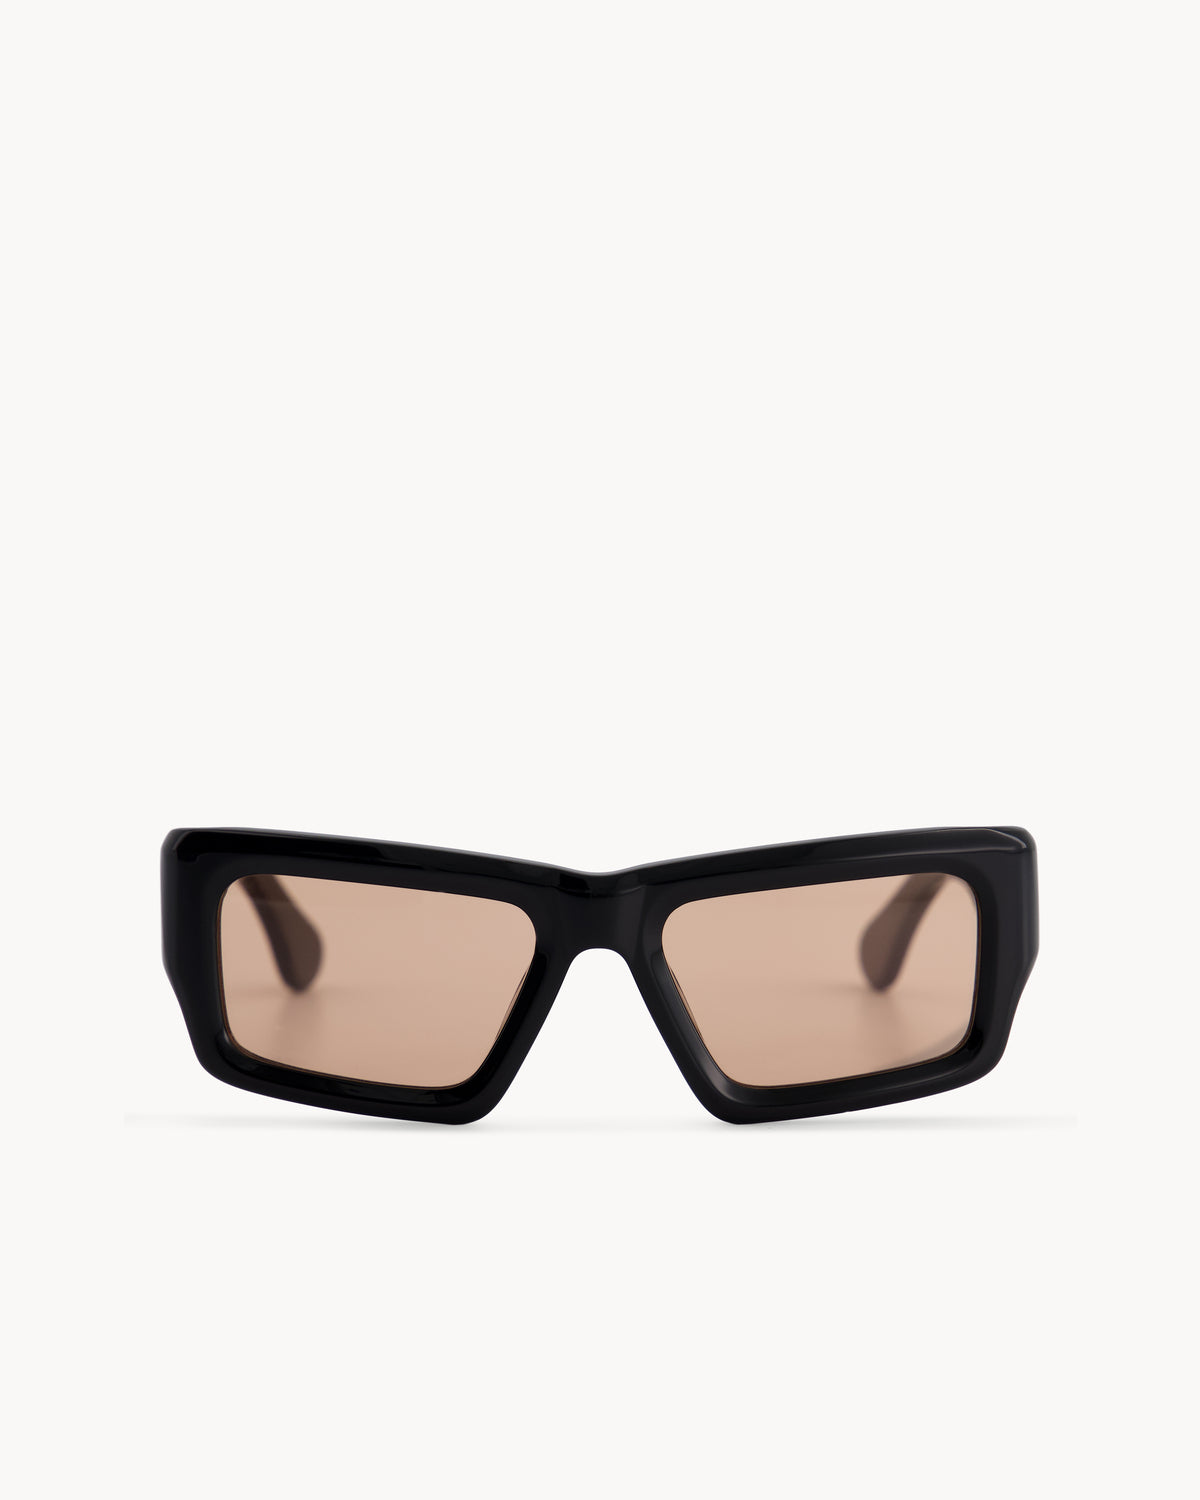 Port Tanger Sabea Sunglasses in Black Acetate and Amber Lenses 1